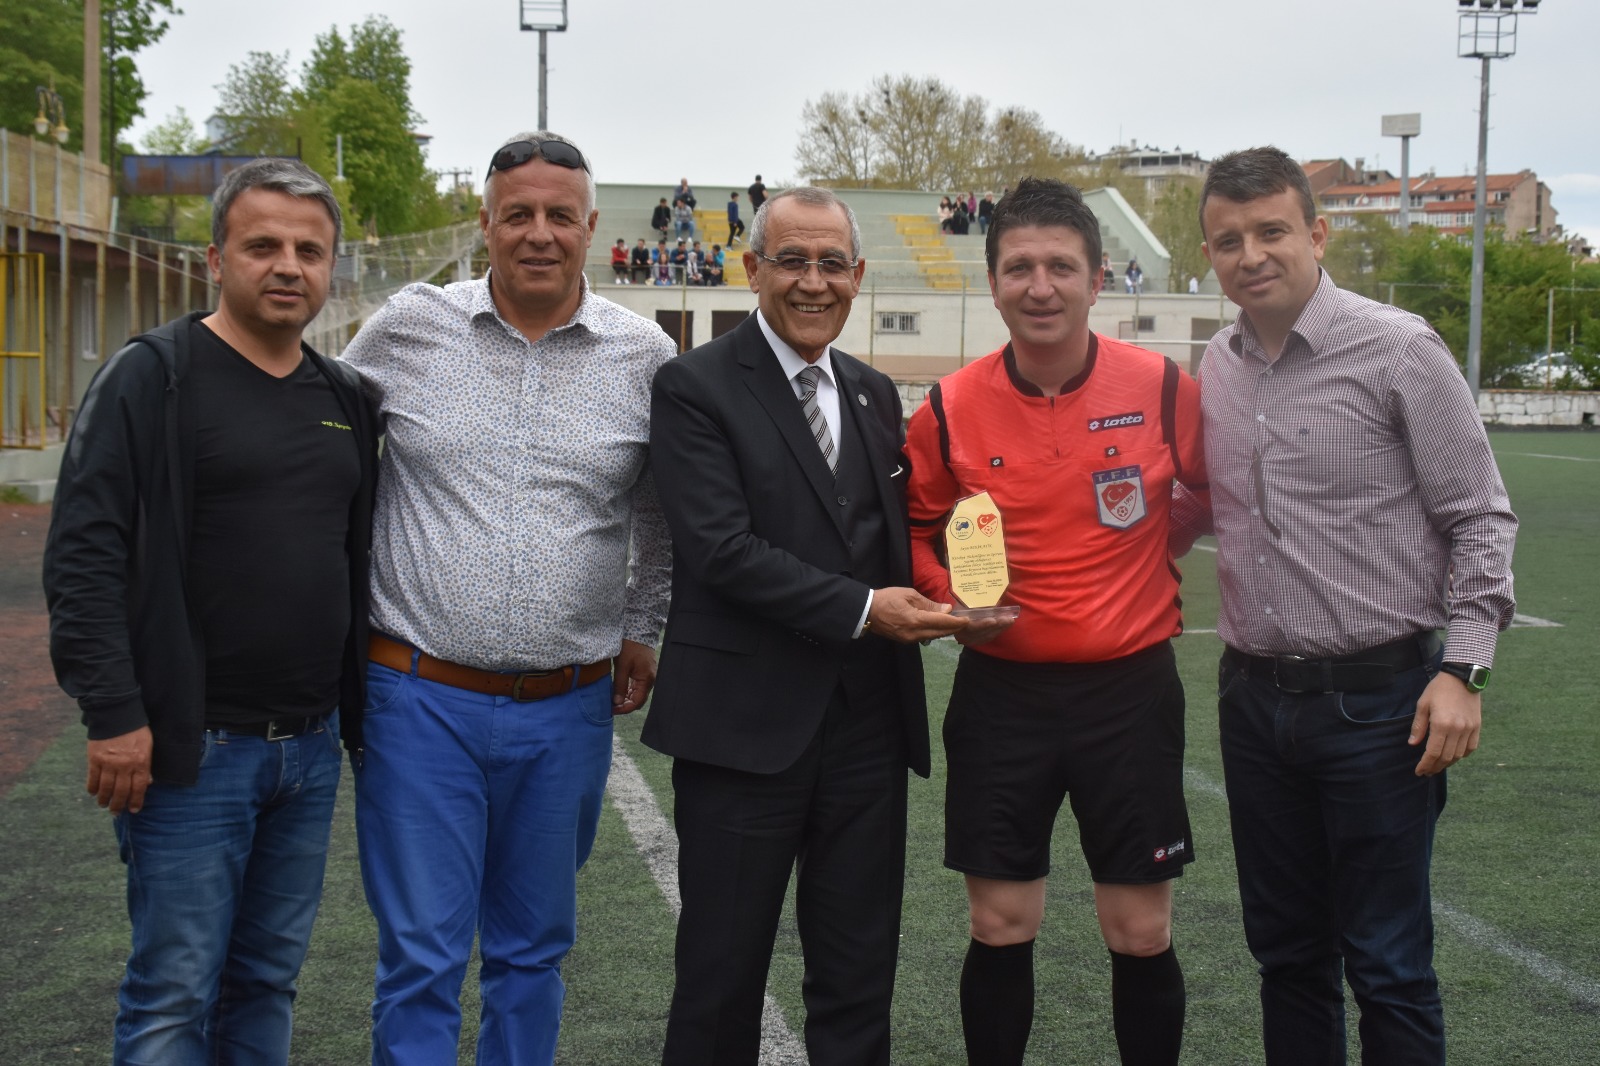 T F F H G D 2. BÖLge Futbol Turnuvası KÜTahya'Da DÜZenlendi̇..!!!